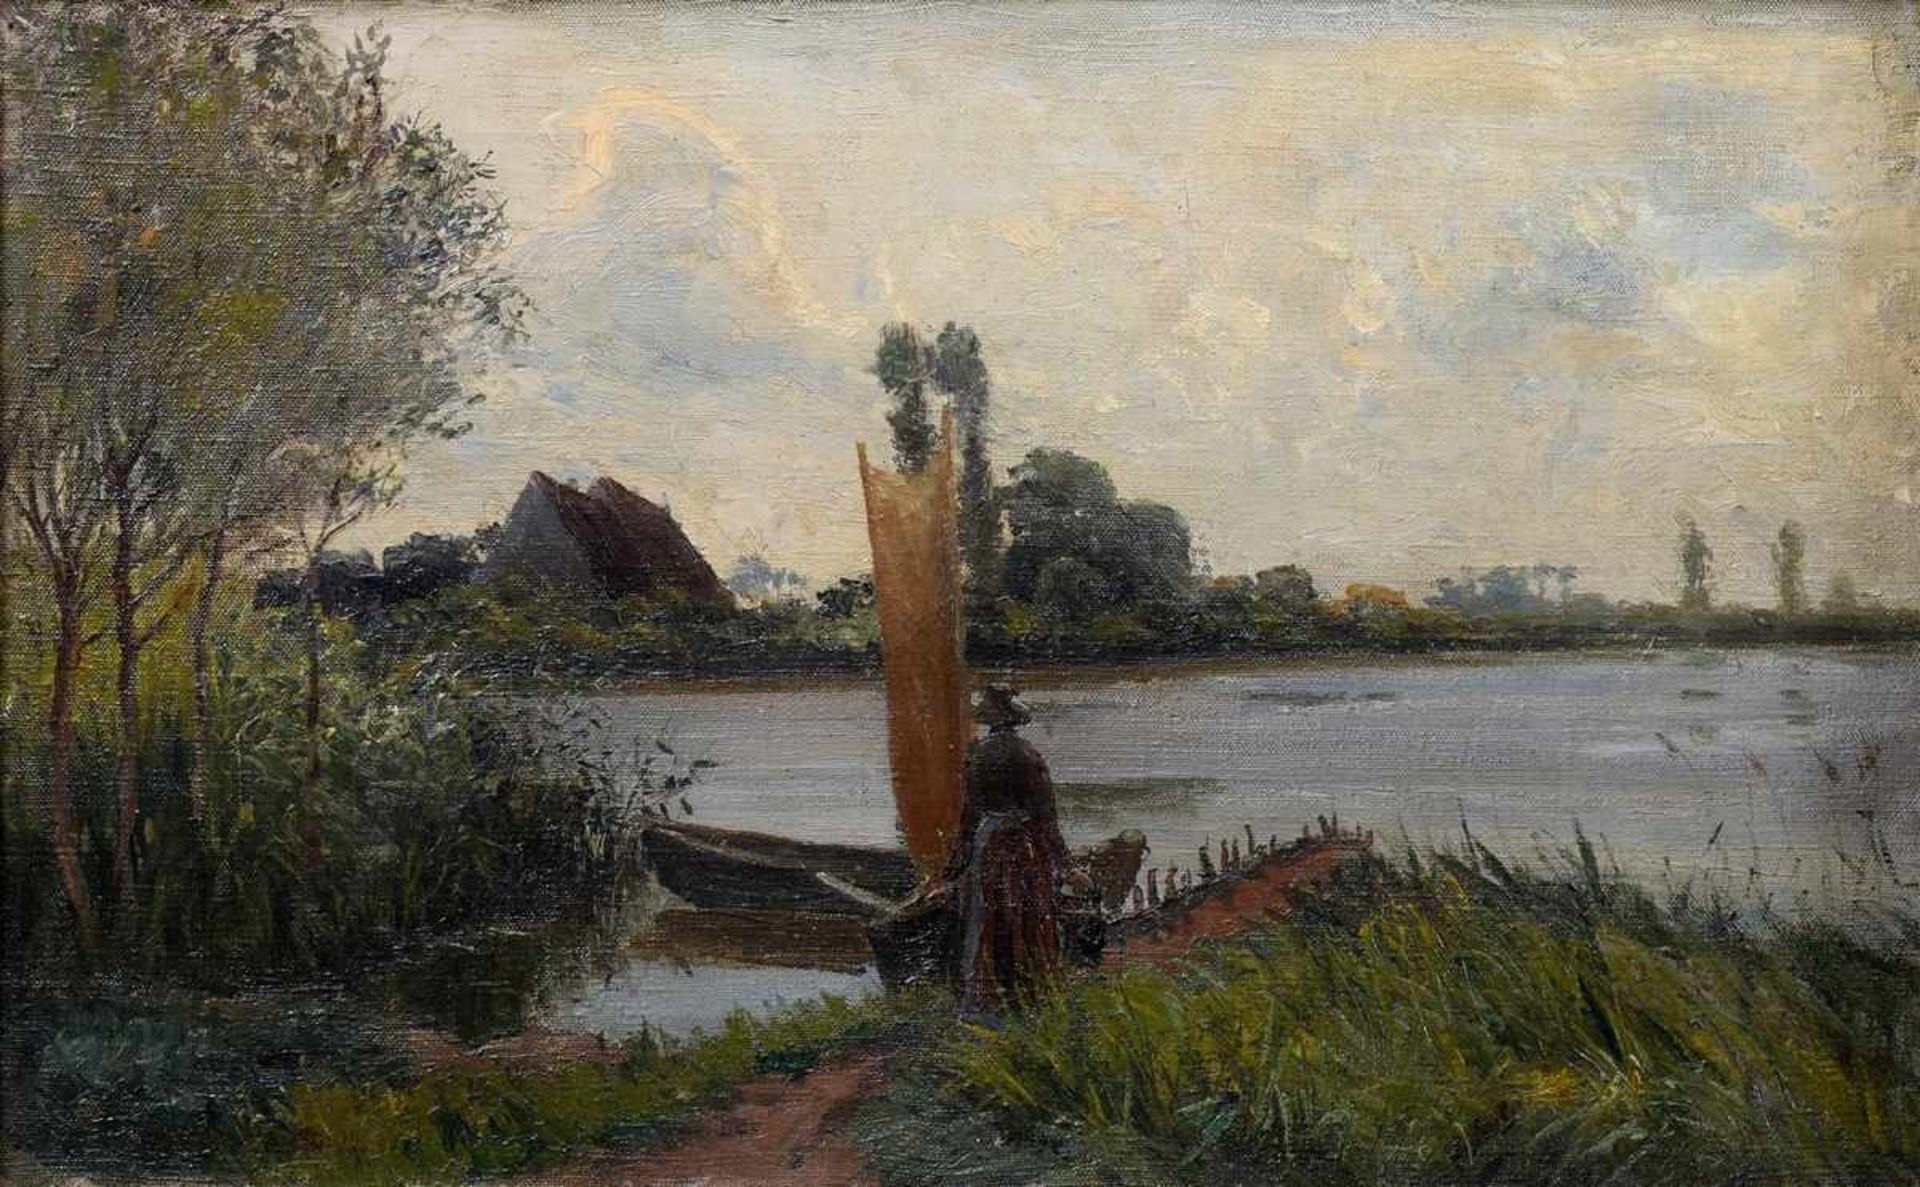 Anderson, Eduard Wilhelm Franz (1873-1947) "Pomeranian Landscape with Fishing Punt" 1902, oil/